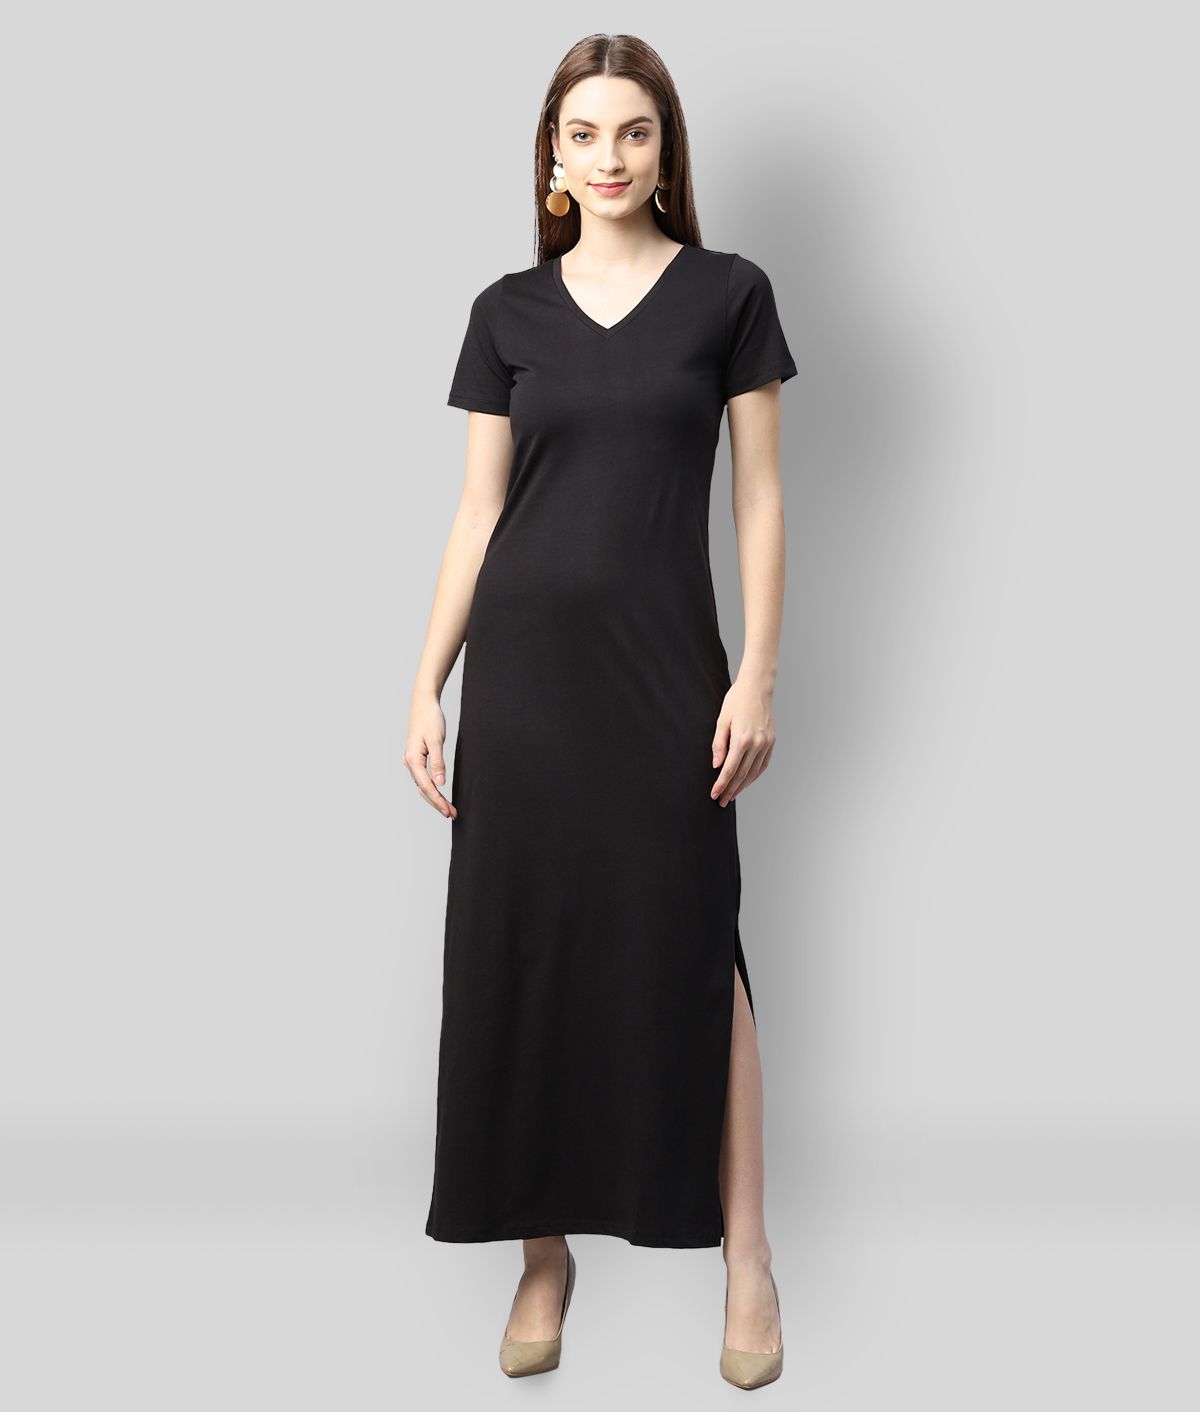 Rigo - Black Cotton Women's Side Slit Dress ( Pack of 1 )